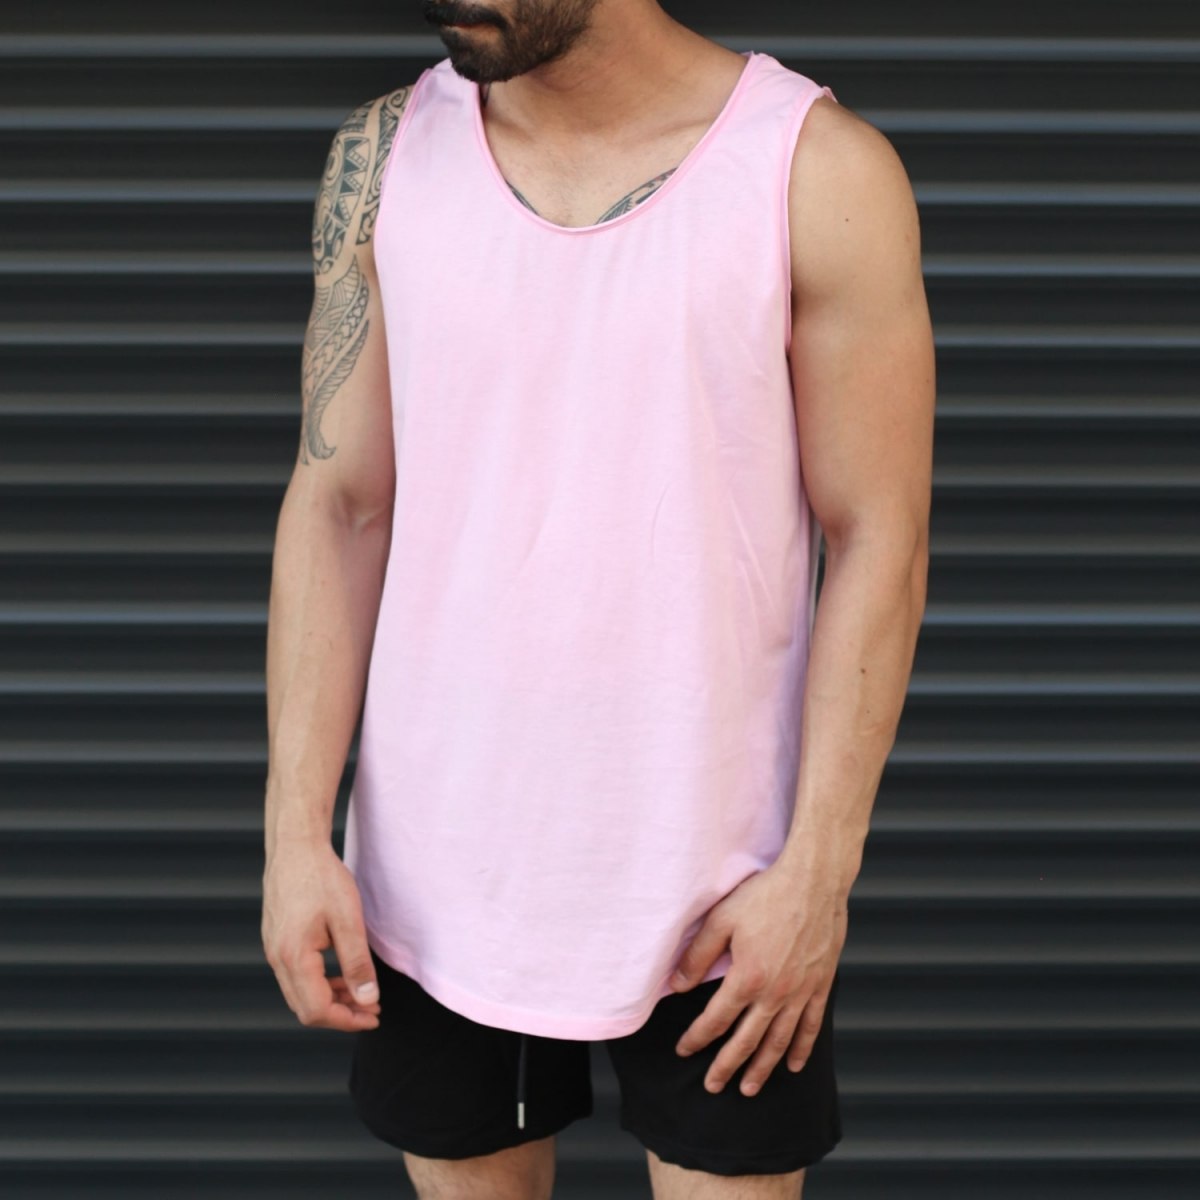 Men's Athletic Sleeveless Longling Tank Top Pink - 1